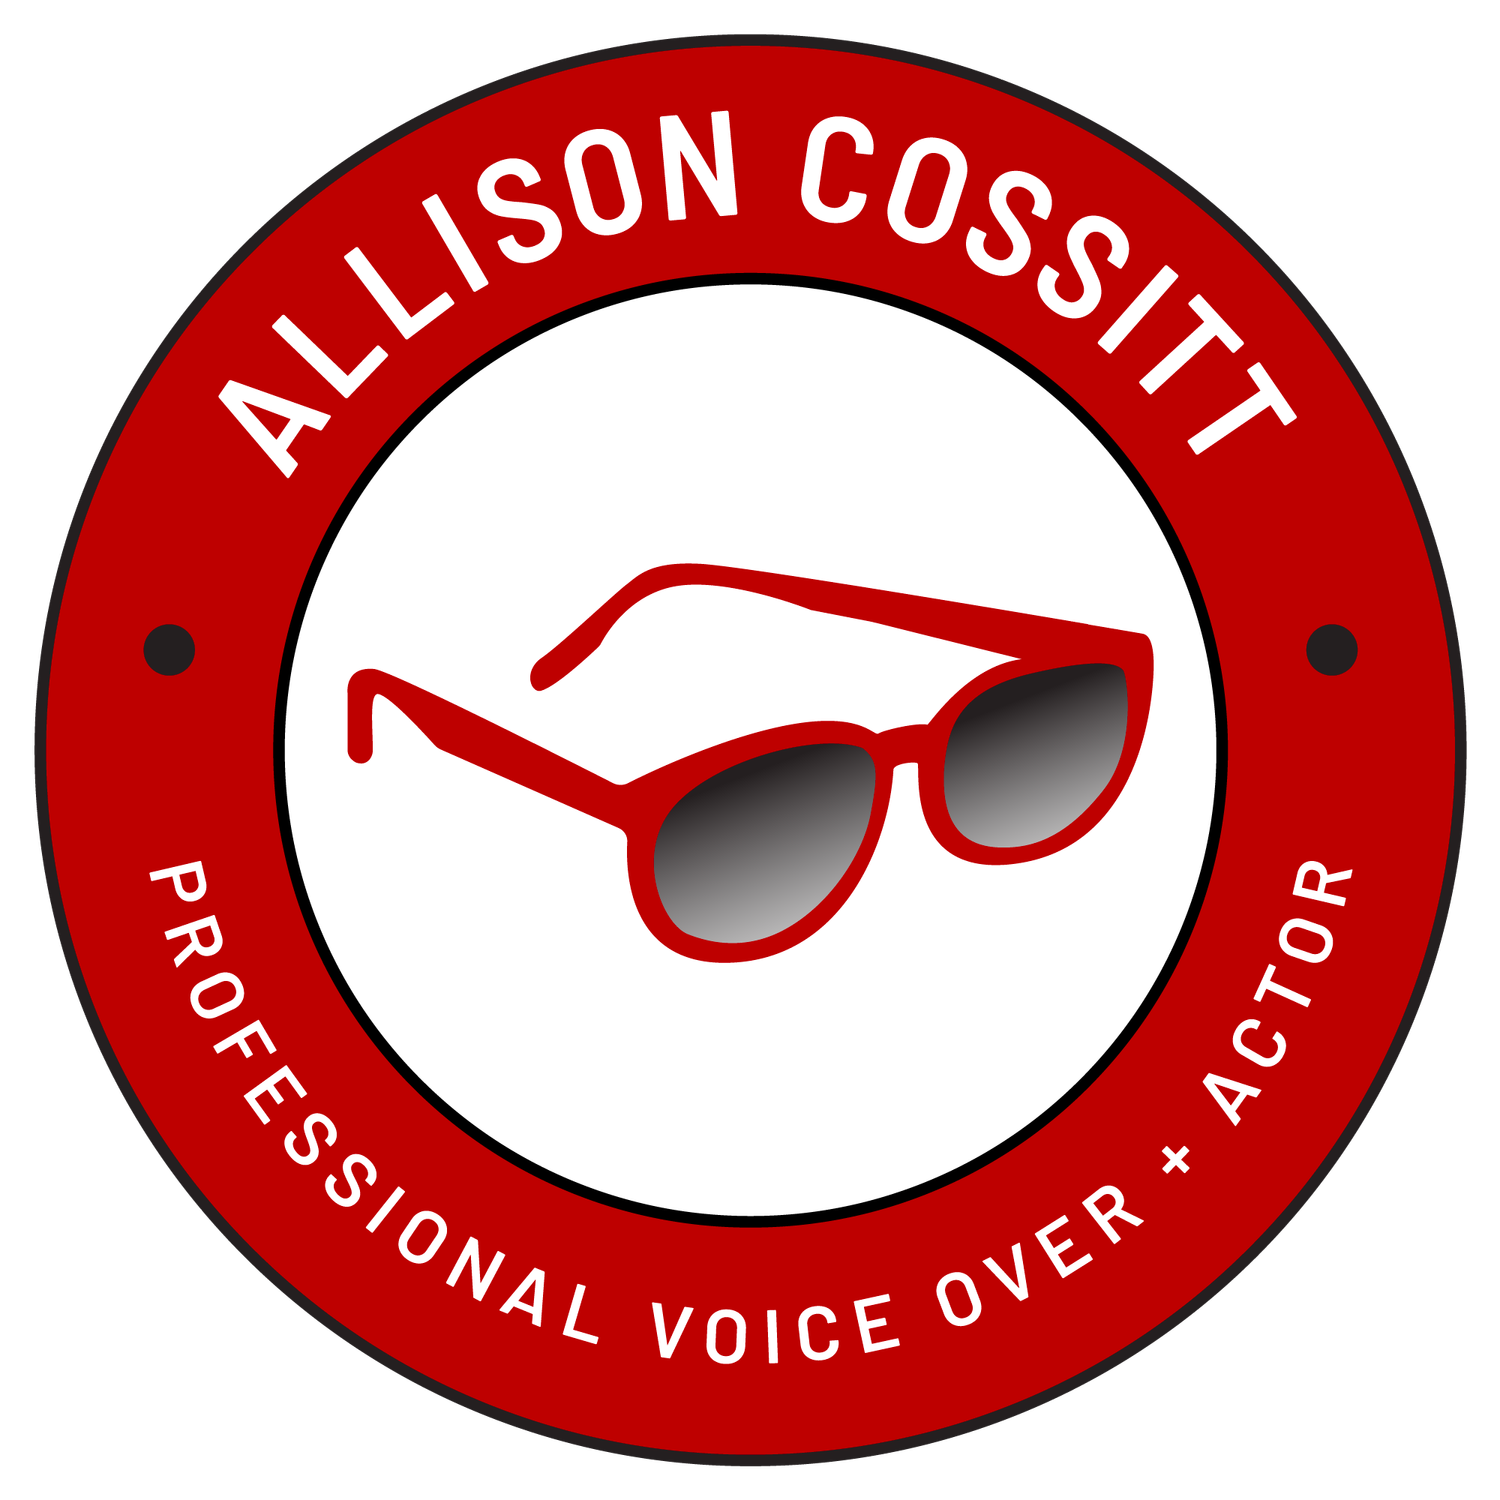 Allison Cossitt Voice Over